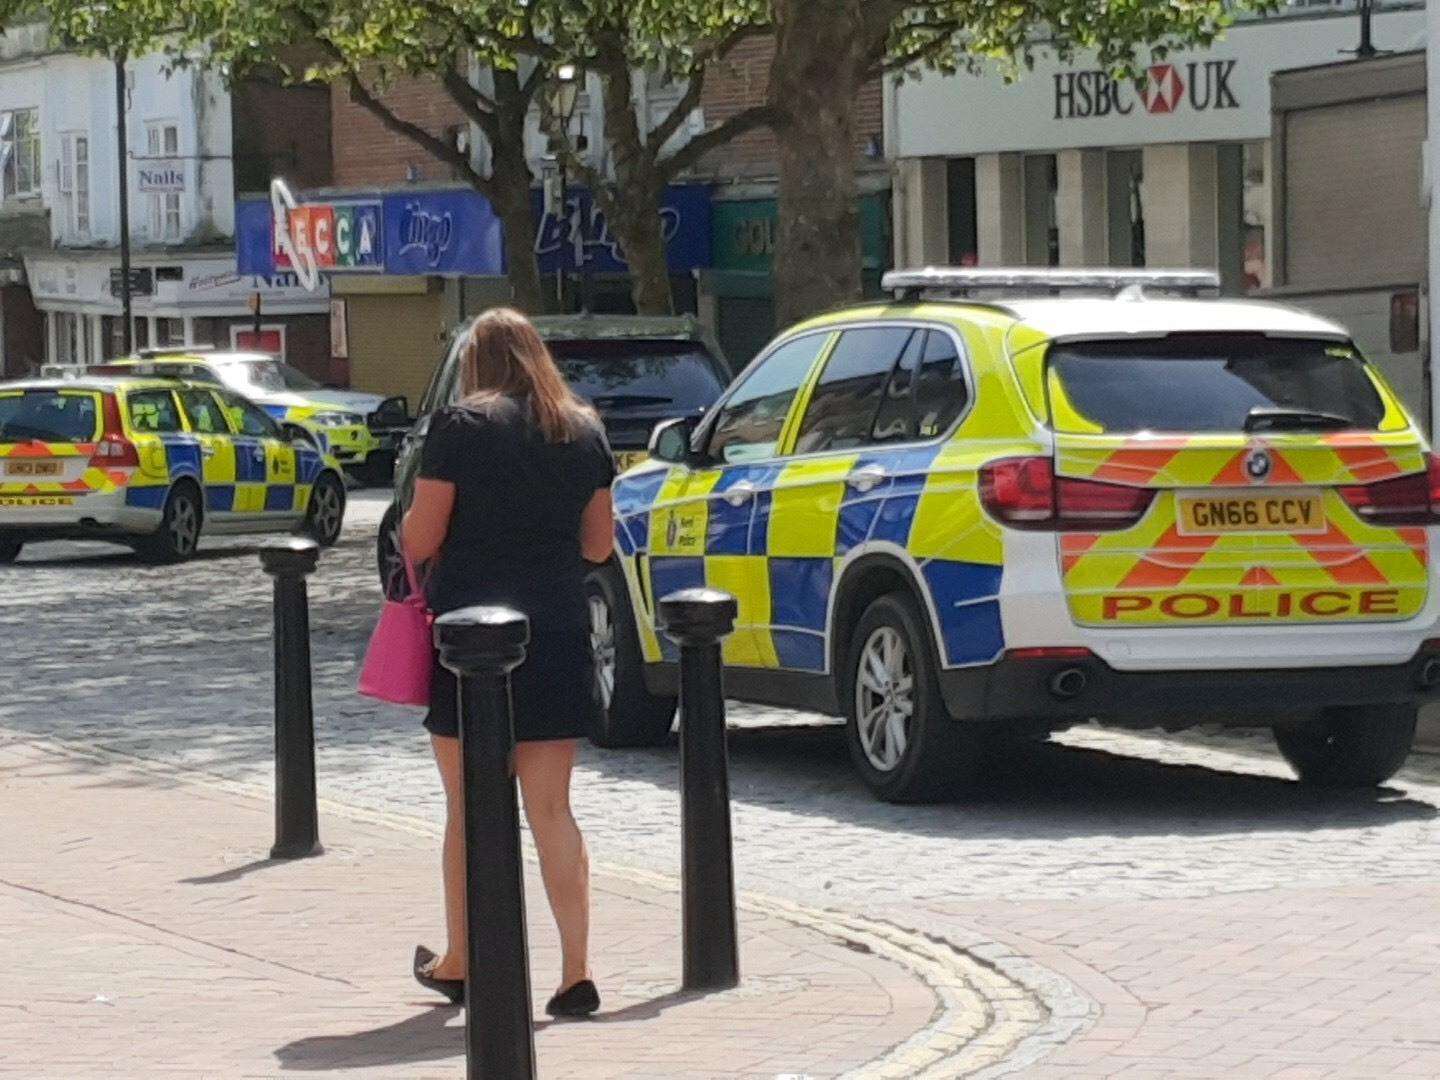 Armed police in Ashford High Street. Picture: Benn Phillips